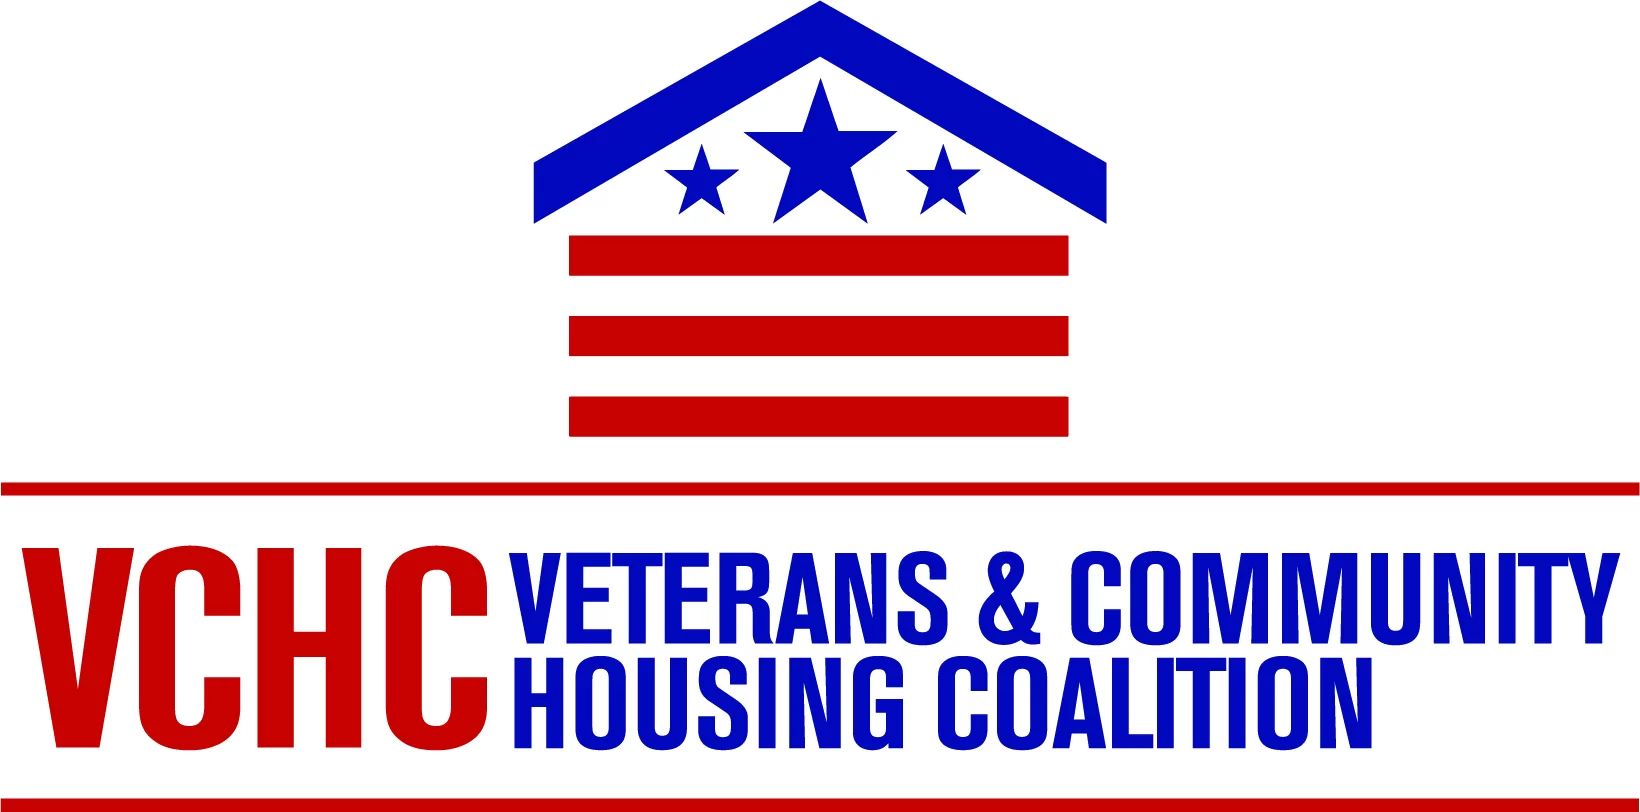 Veterans & Community Housing Coalition